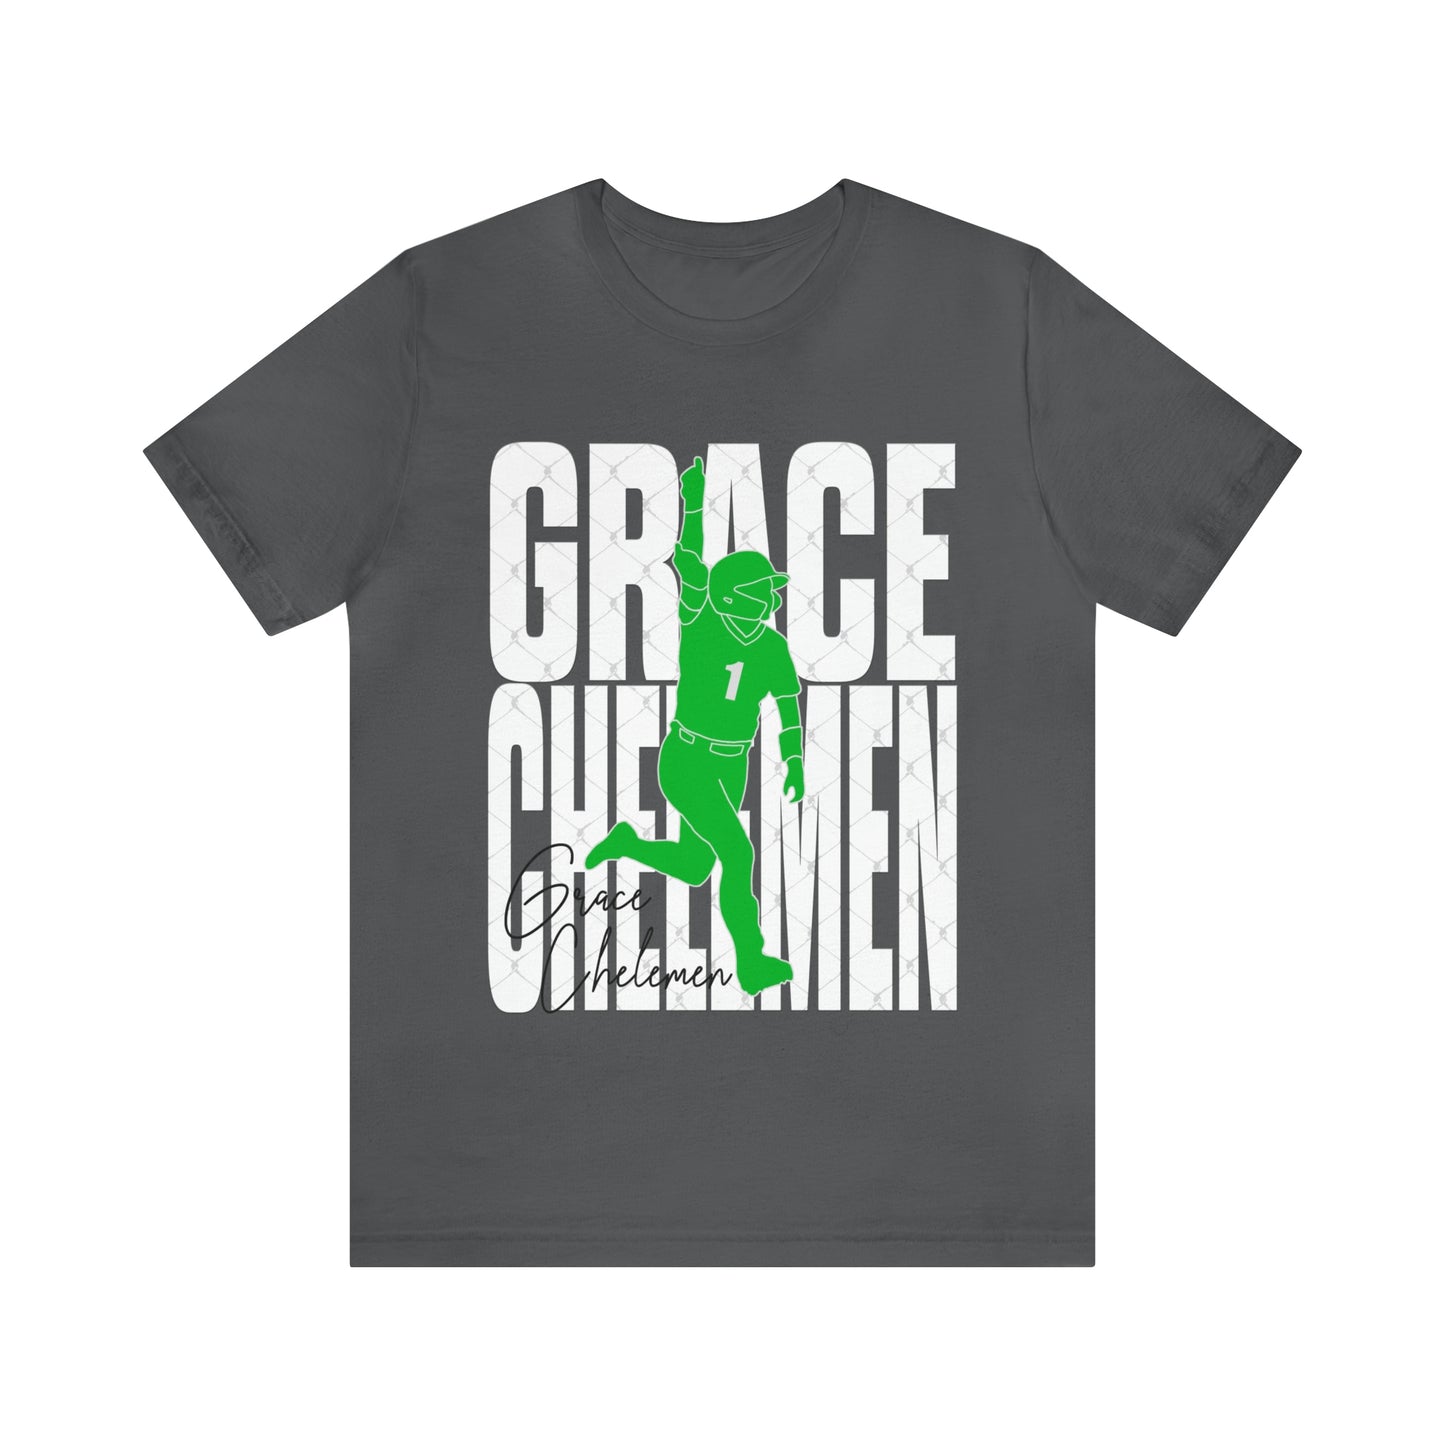 Grace Chelemen: GameDay Tee